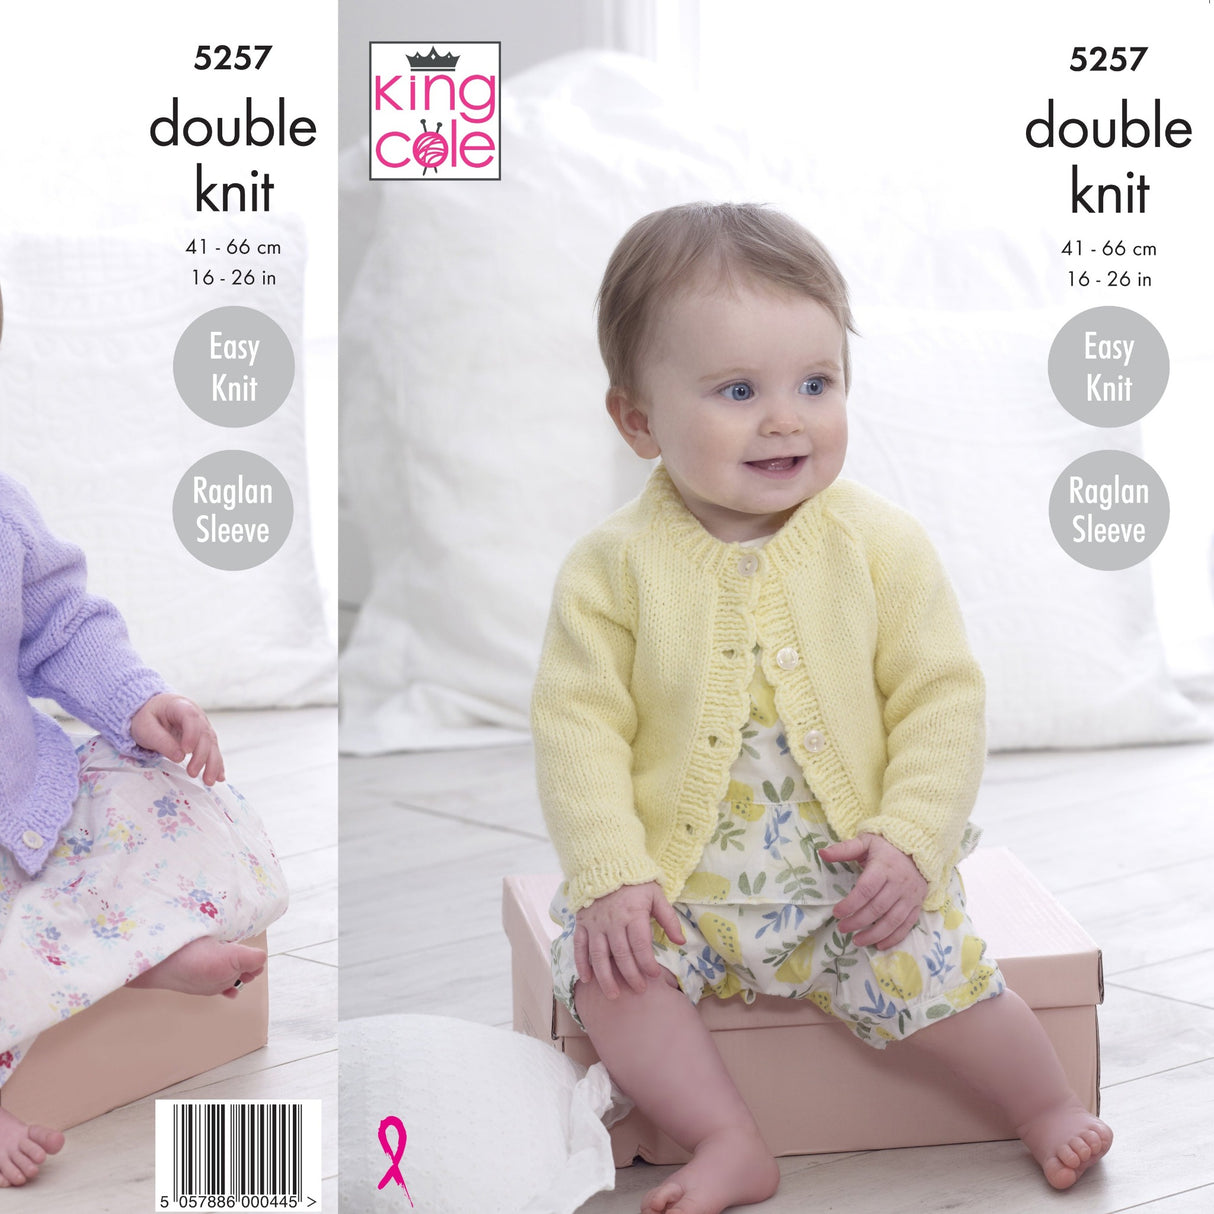 King Cole Easy Knit Kids Cardigan Pattern 5257